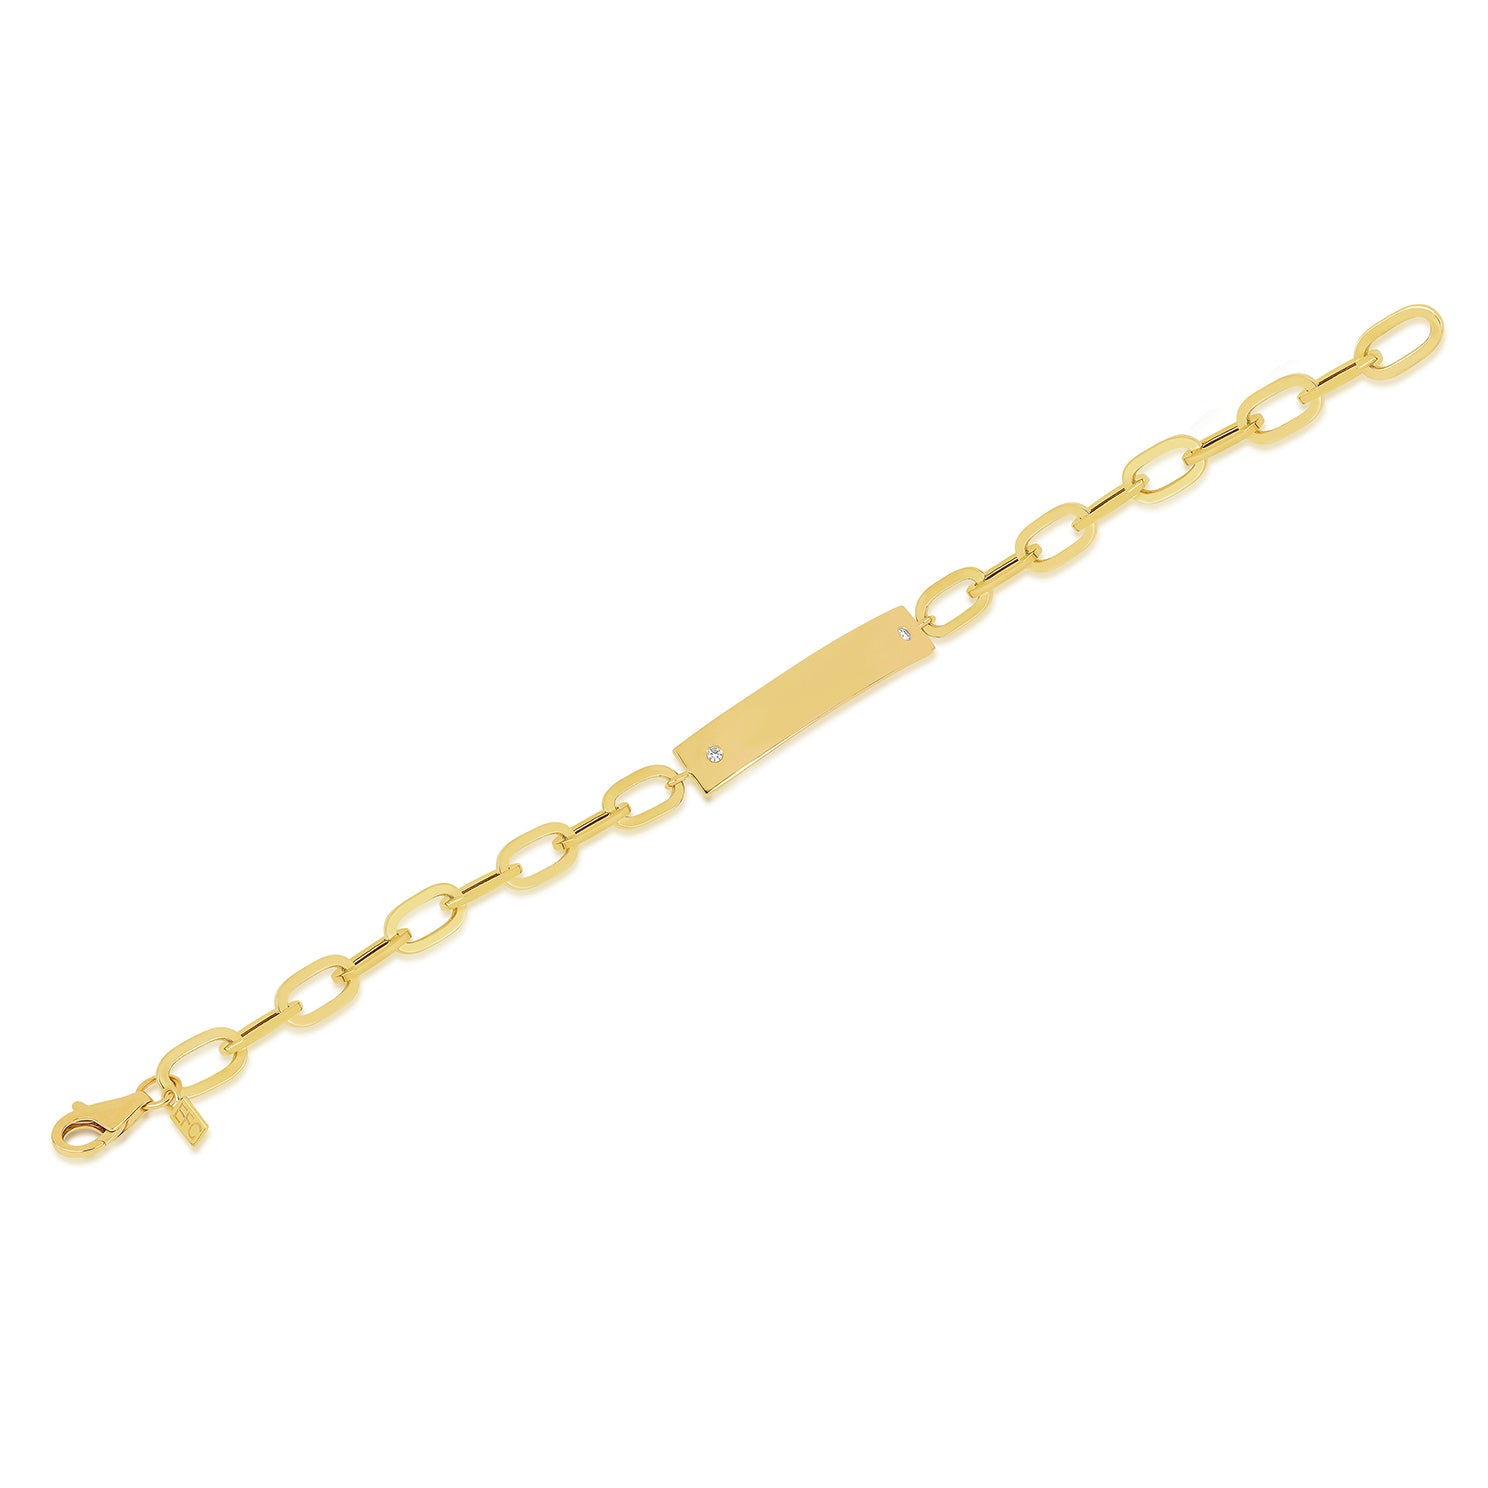 Nameplate Jumbo Link Bracelet in 14k yellow gold